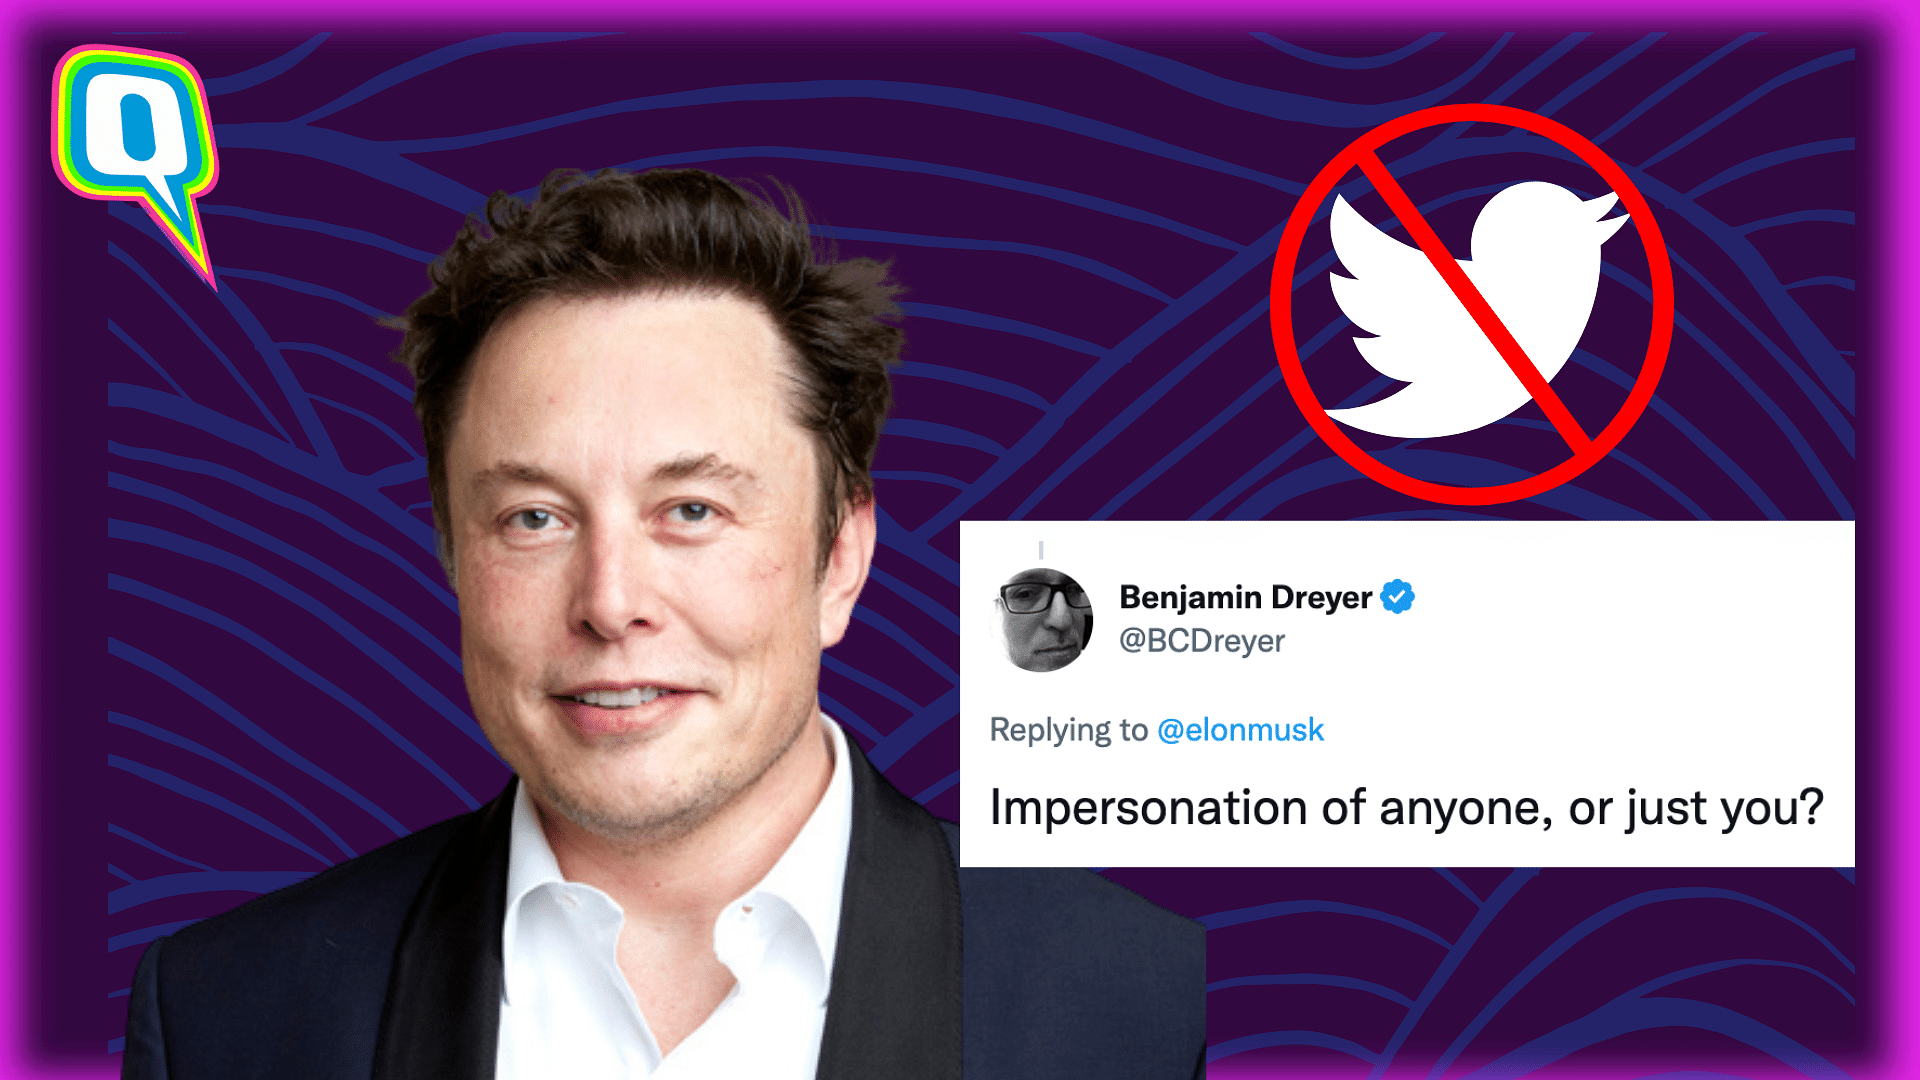 <div class="paragraphs"><p>Elon Musk suspends parody accounts that impersonated him.</p></div>